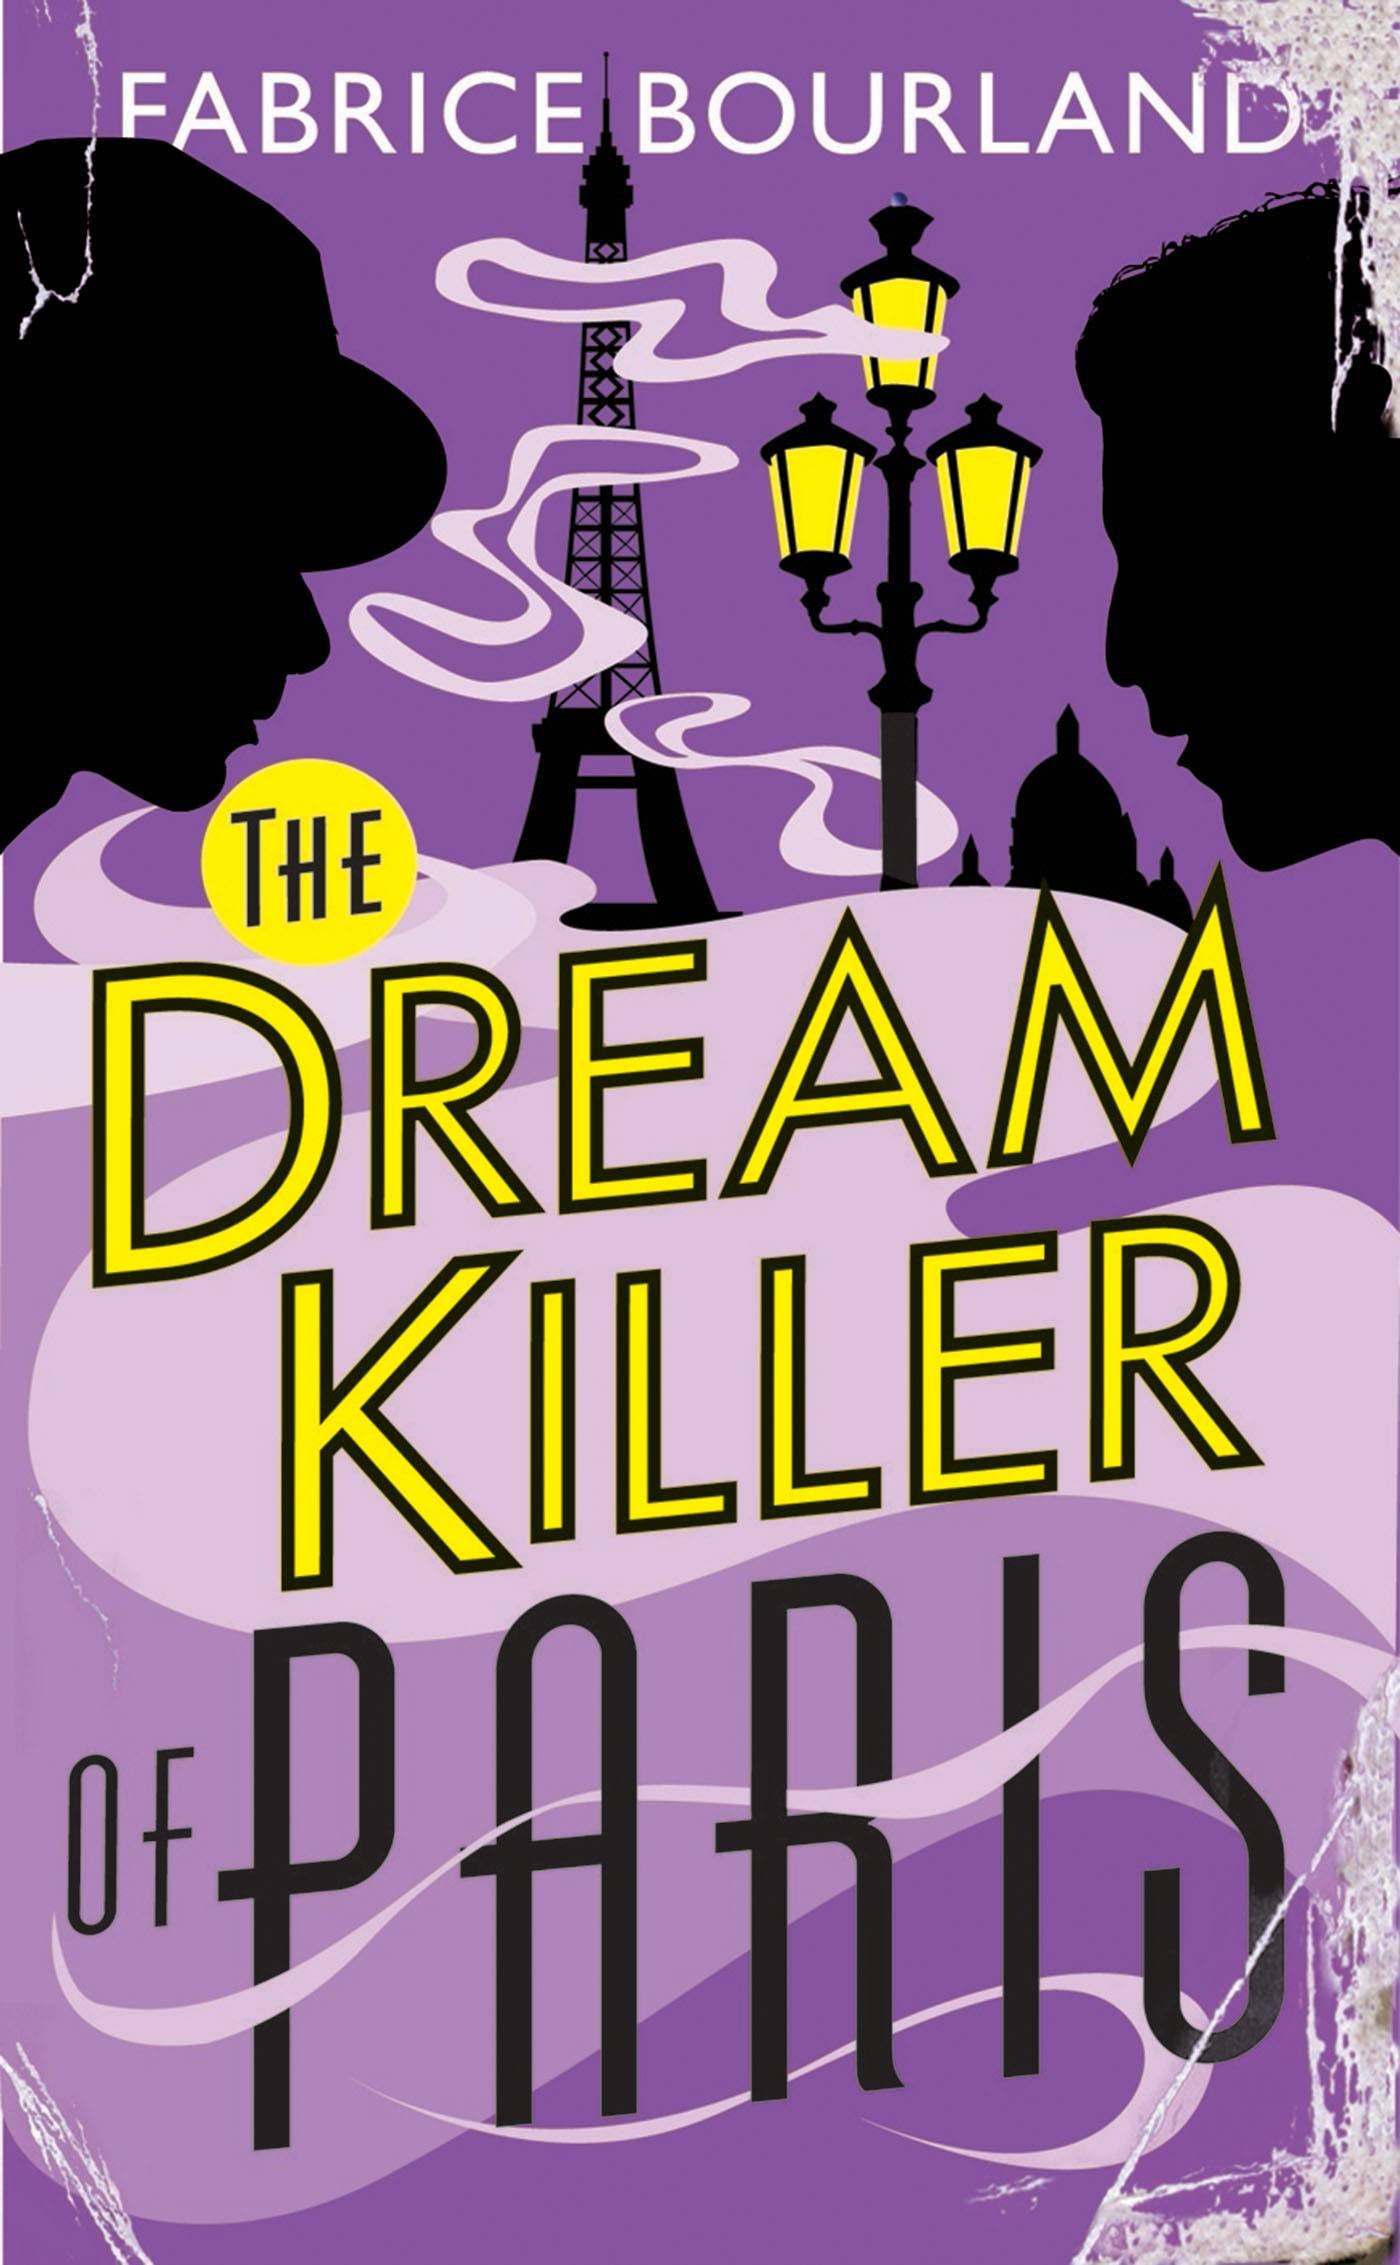 Dream killers. Dream Killing. The Dream is Killer перевод.